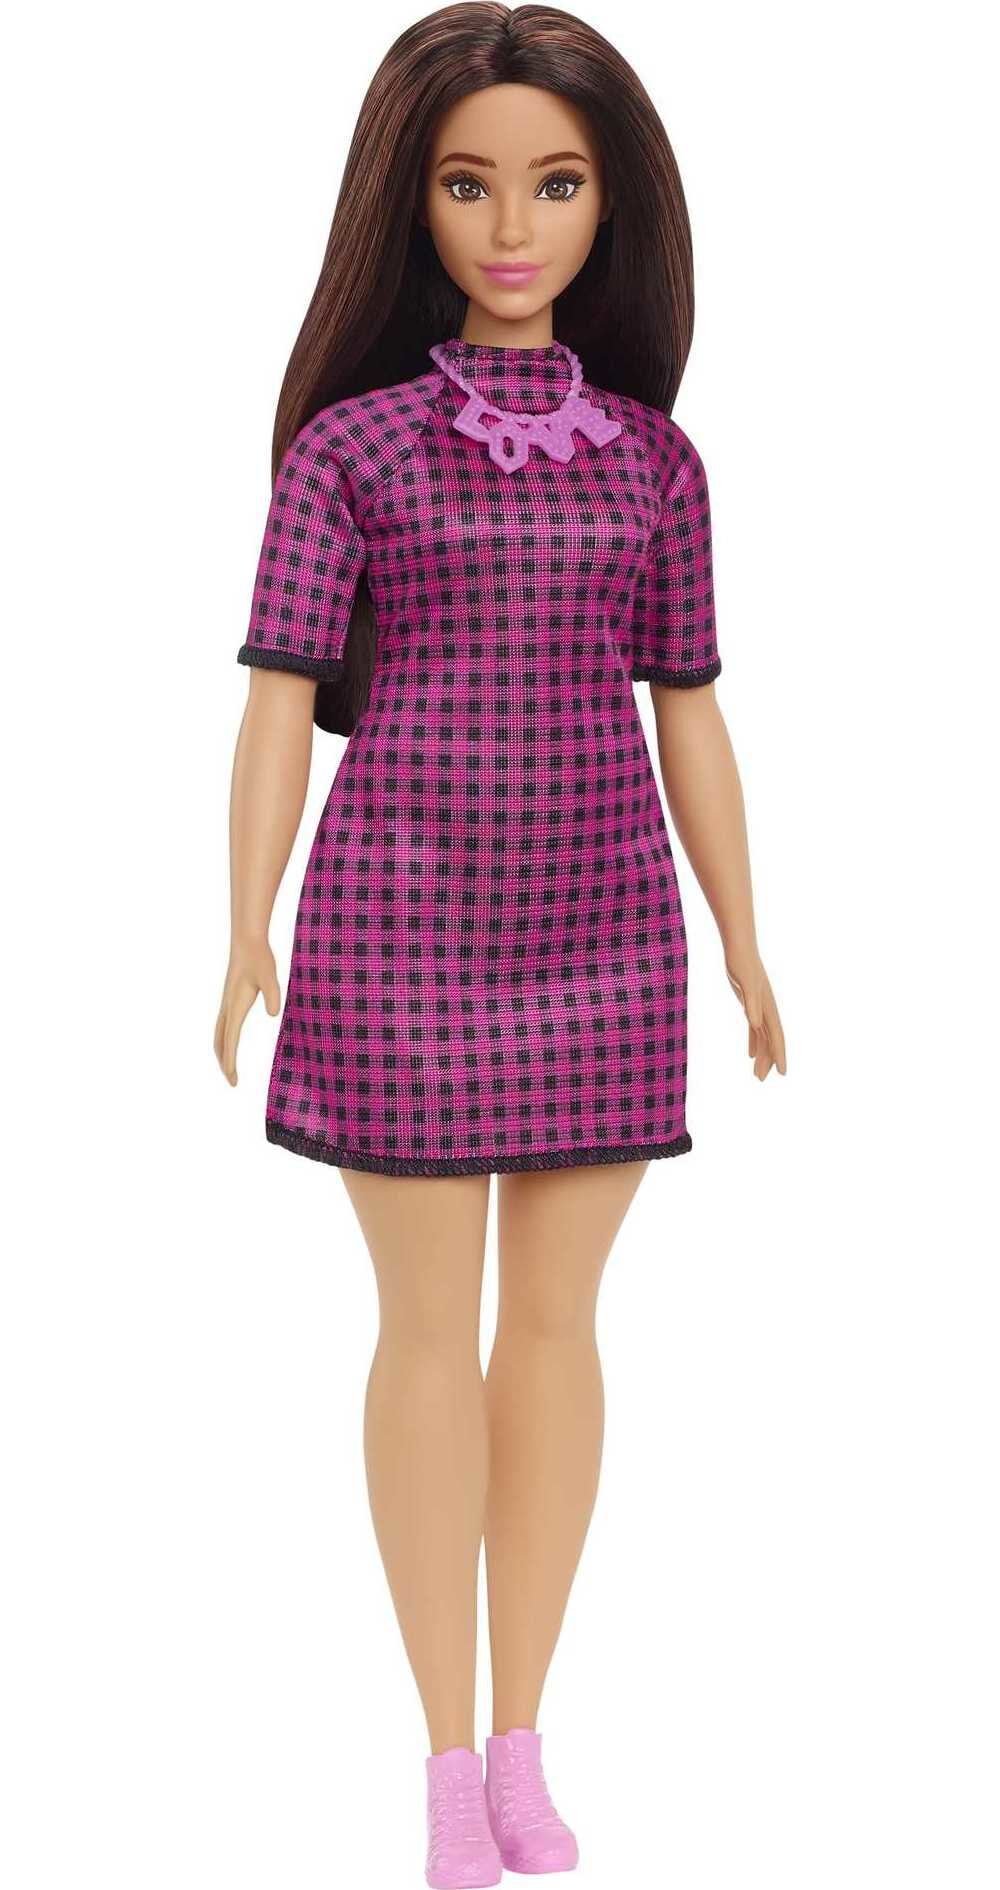 Barbie Petit Ken Tarten Jean's Fashionista Doll Fashion Clothes Accessory 